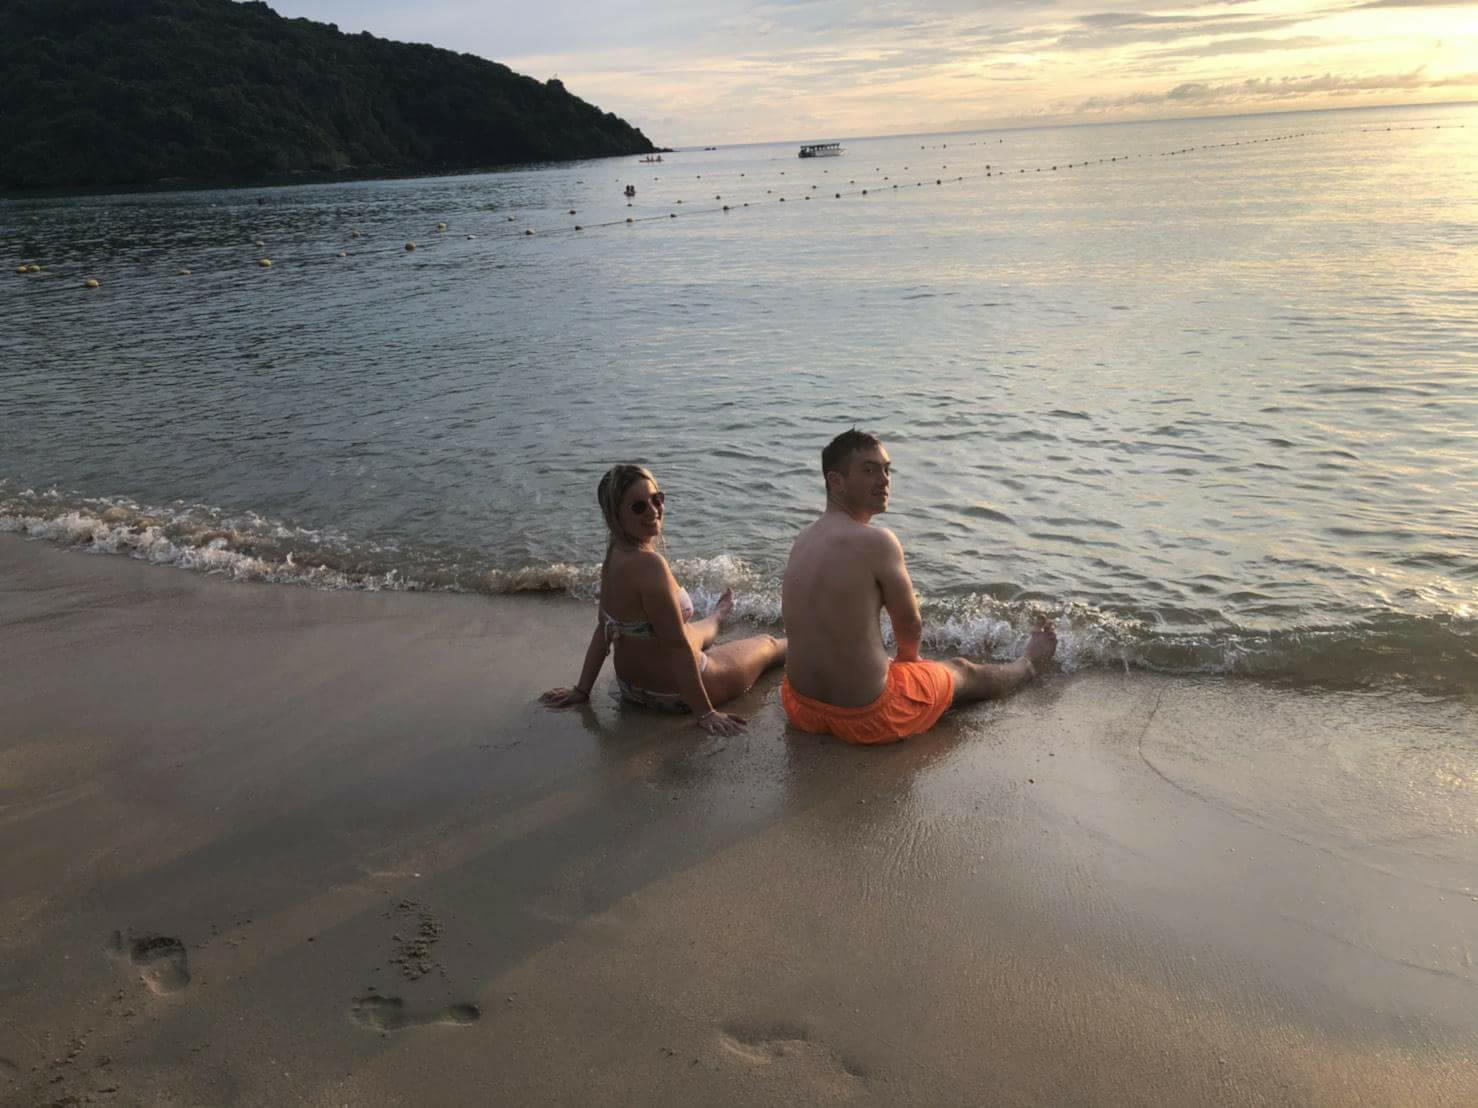 Keith and Roksana sitting on the beach